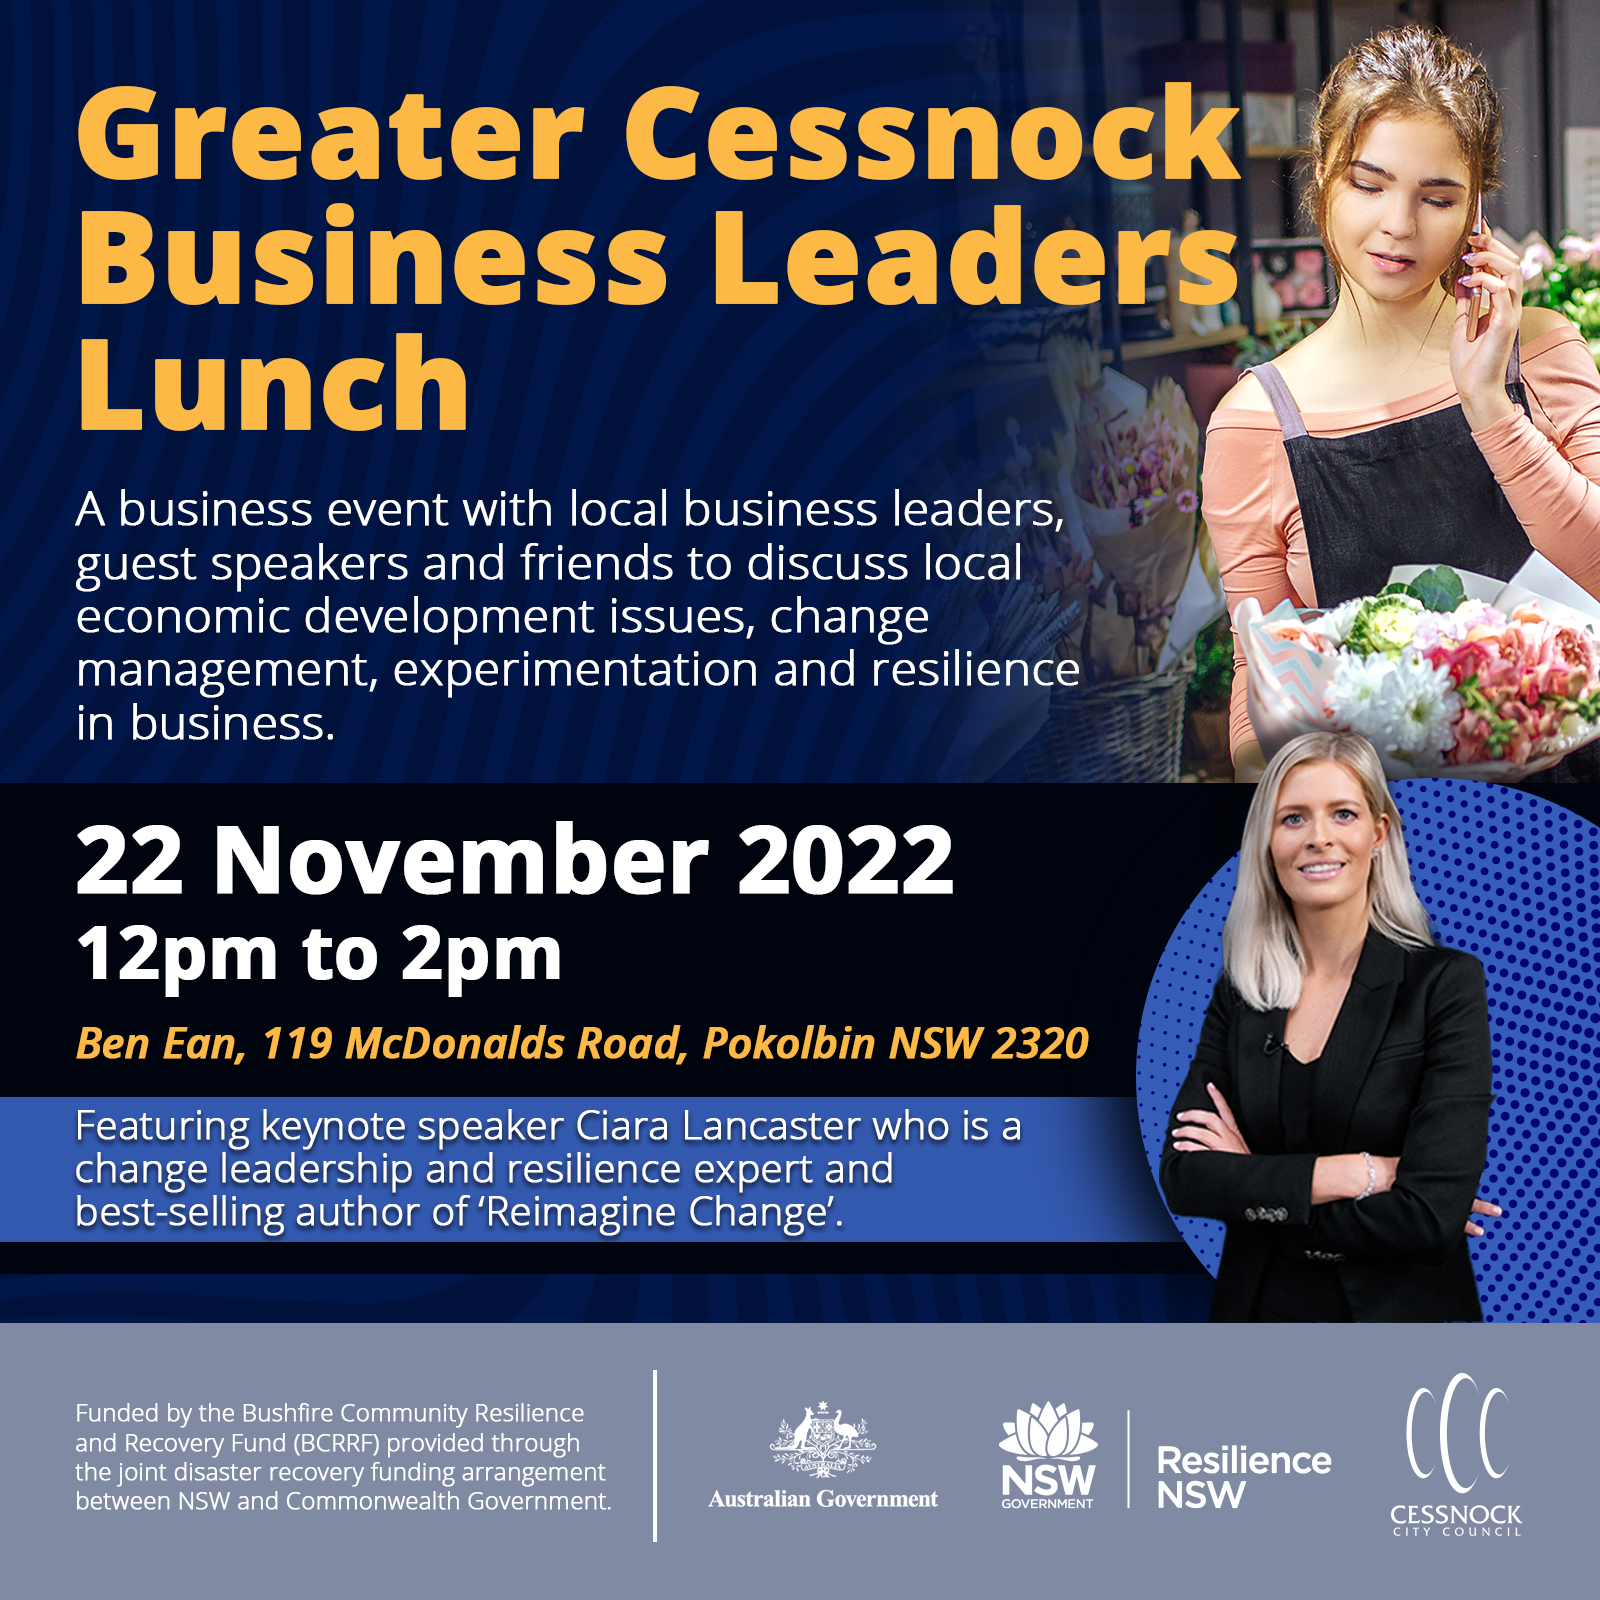 Reater Cessnock Business Leaders Lunch 22 November 2022